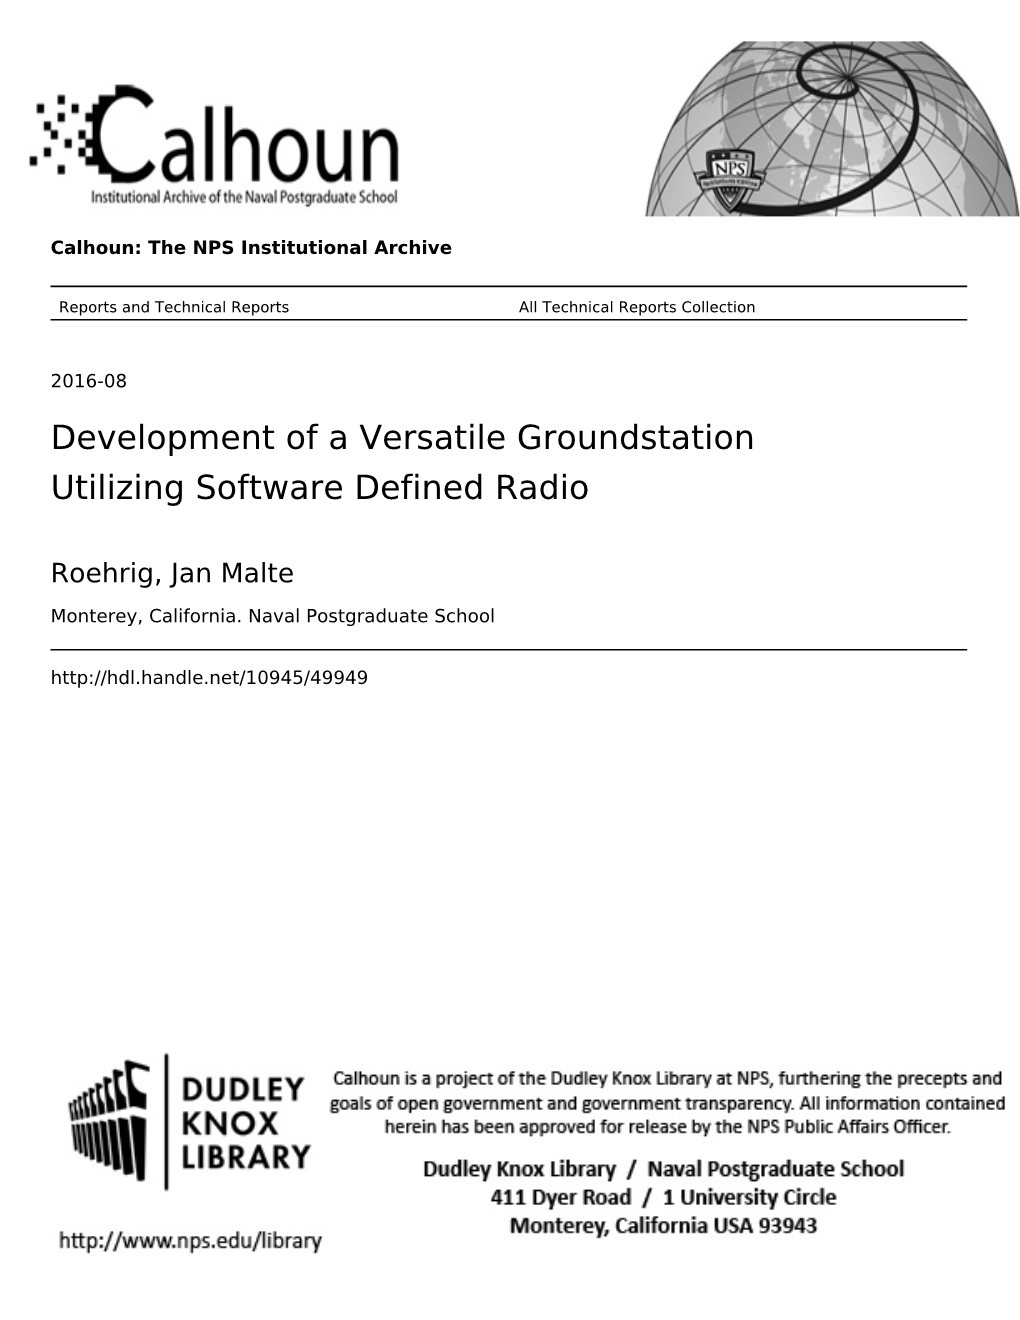 Development of a Versatile Groundstation Utilizing Software Defined Radio